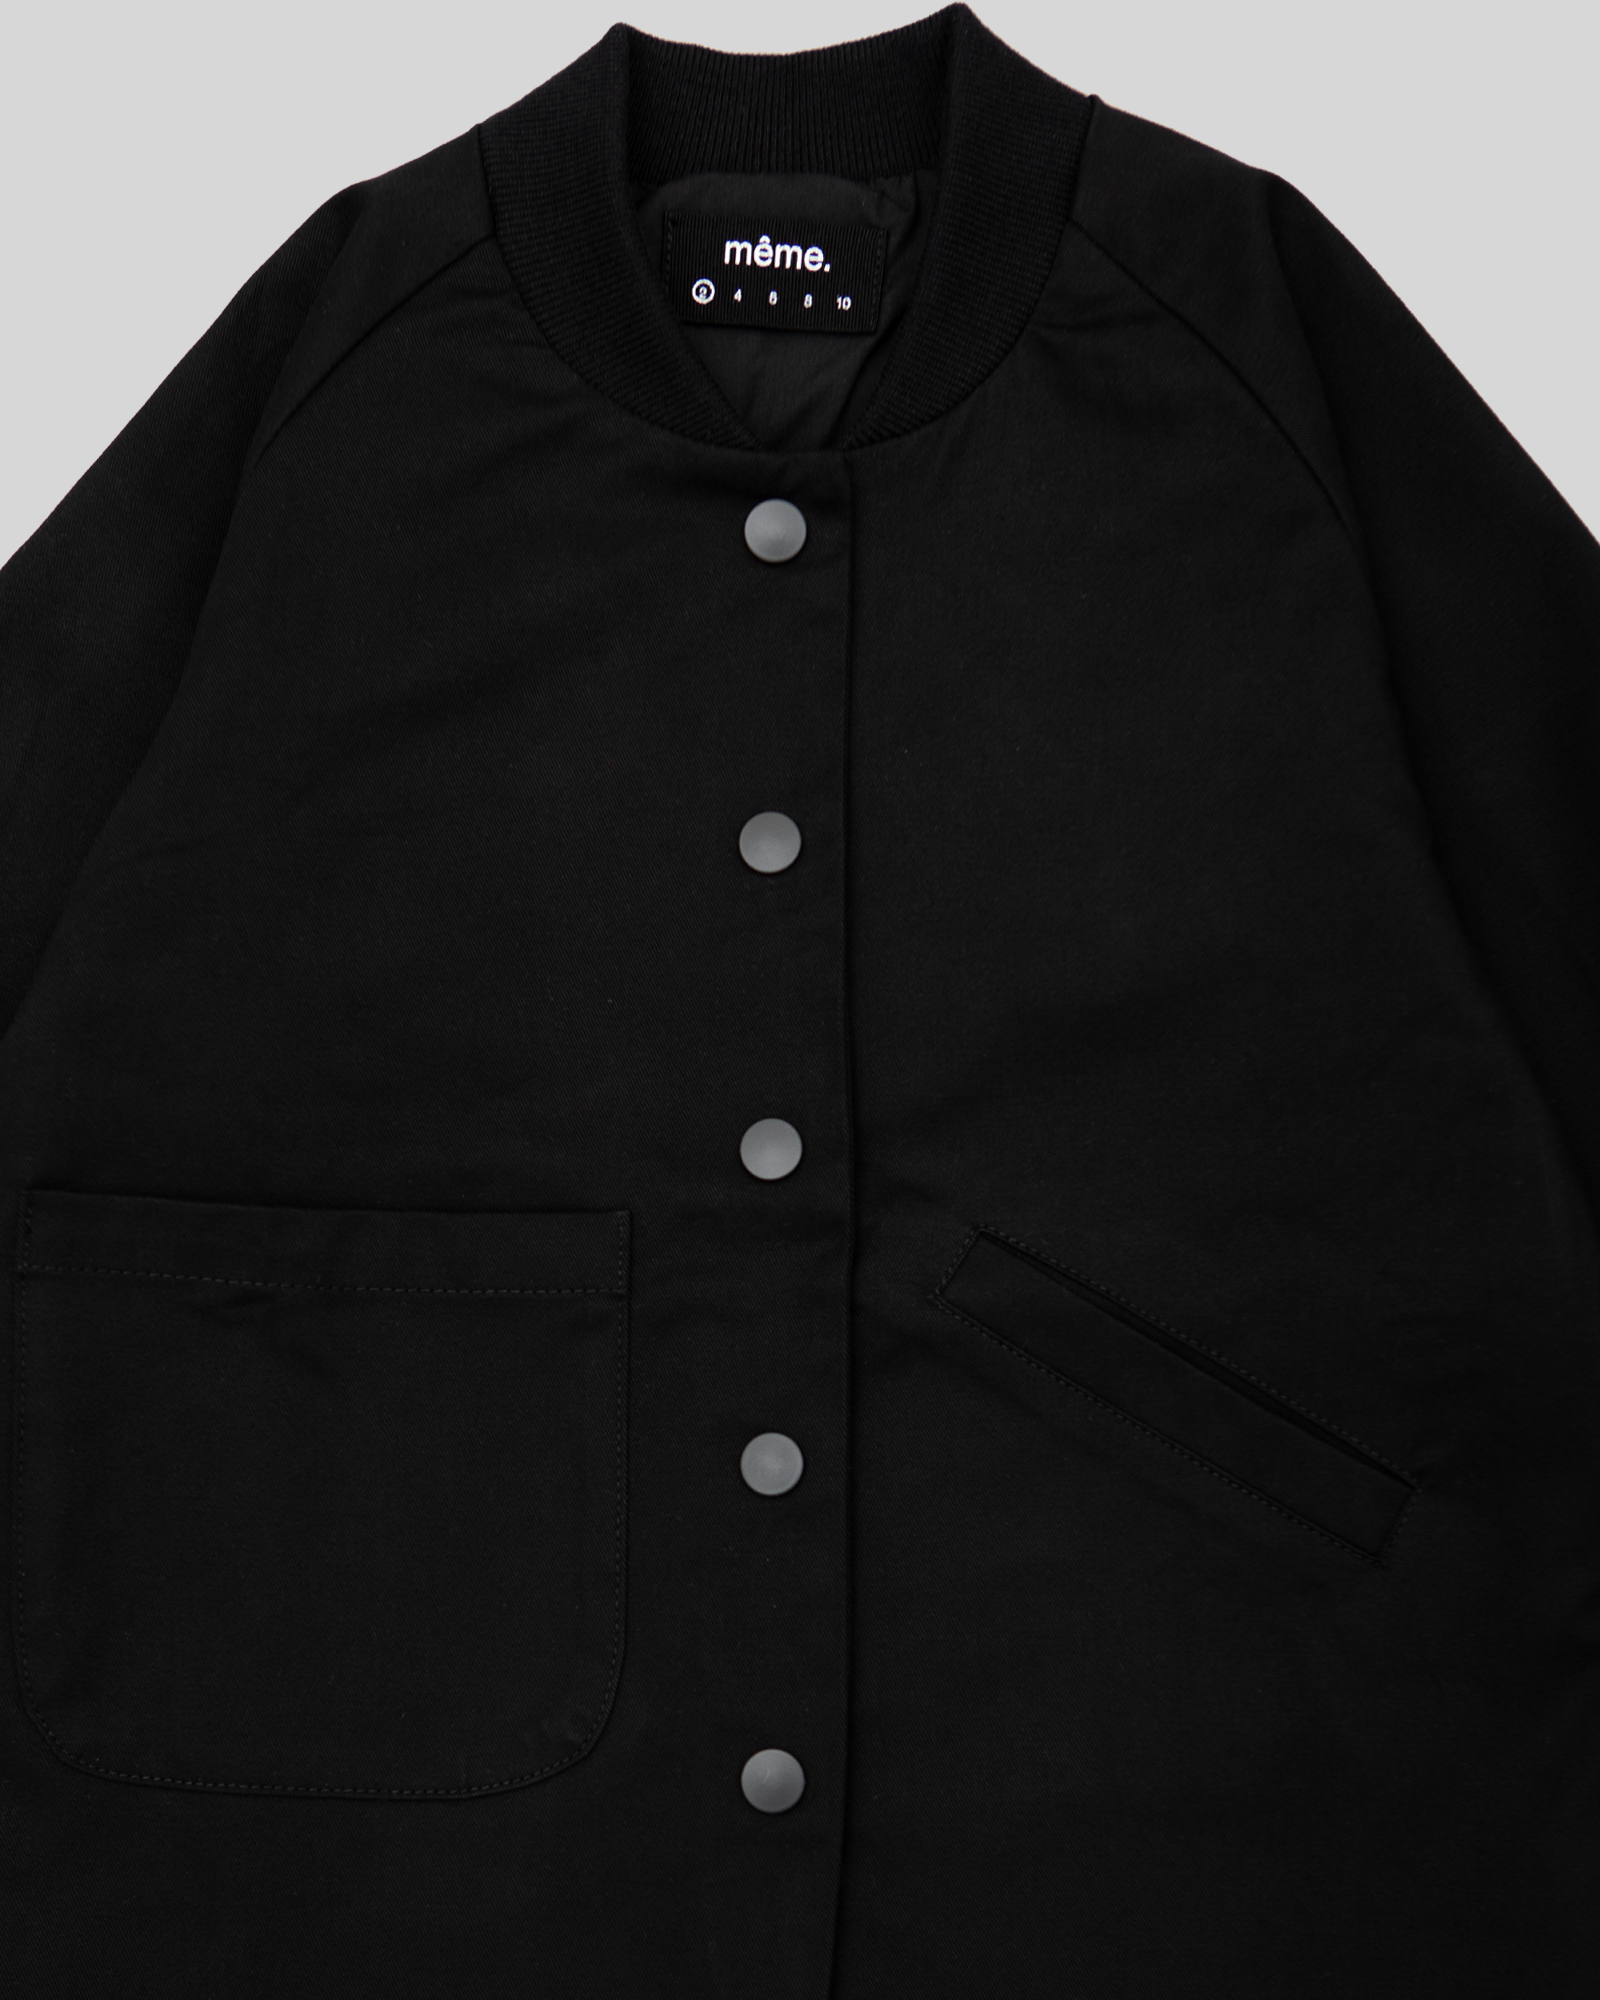 mercy varsity jacket - black